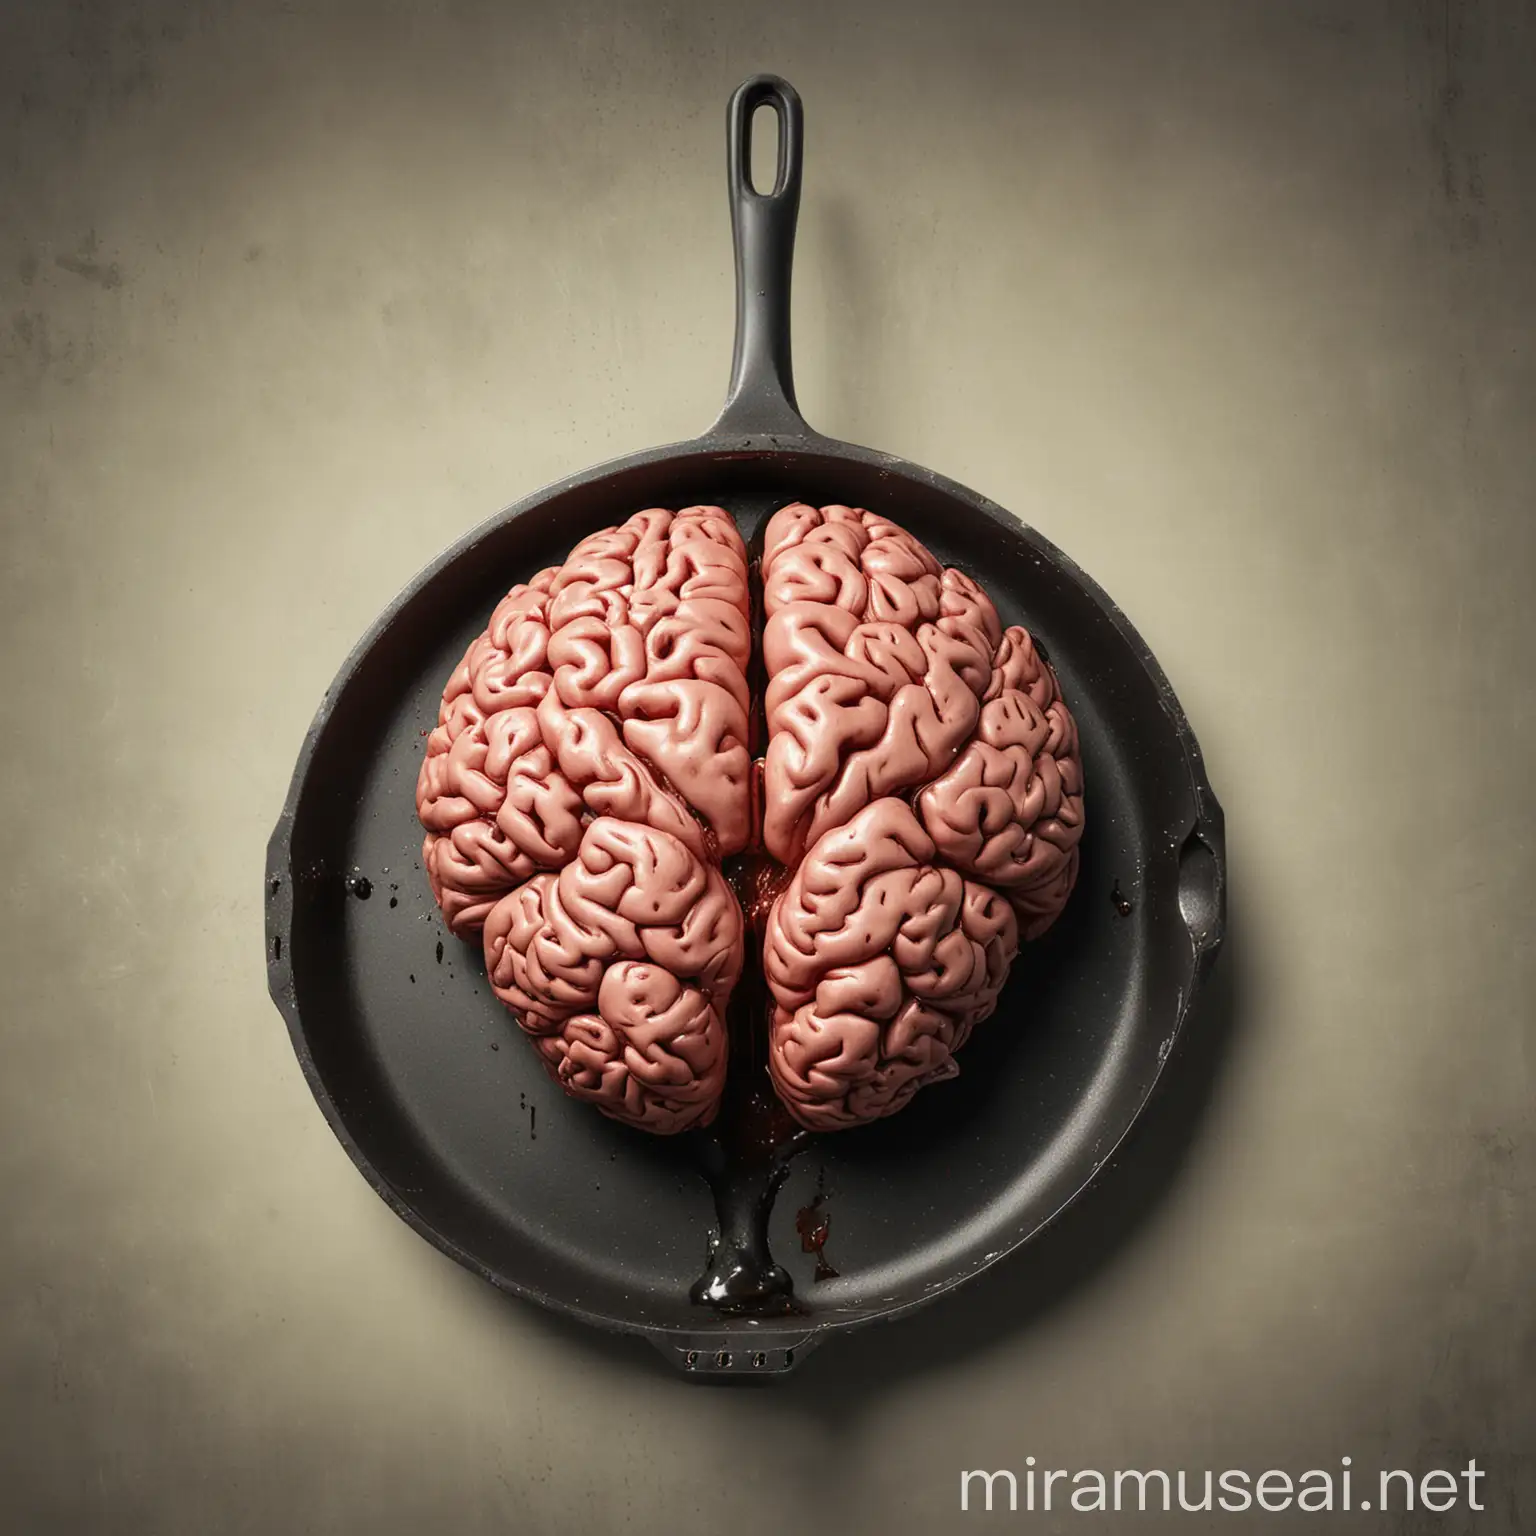 Brain Firing in a Pan